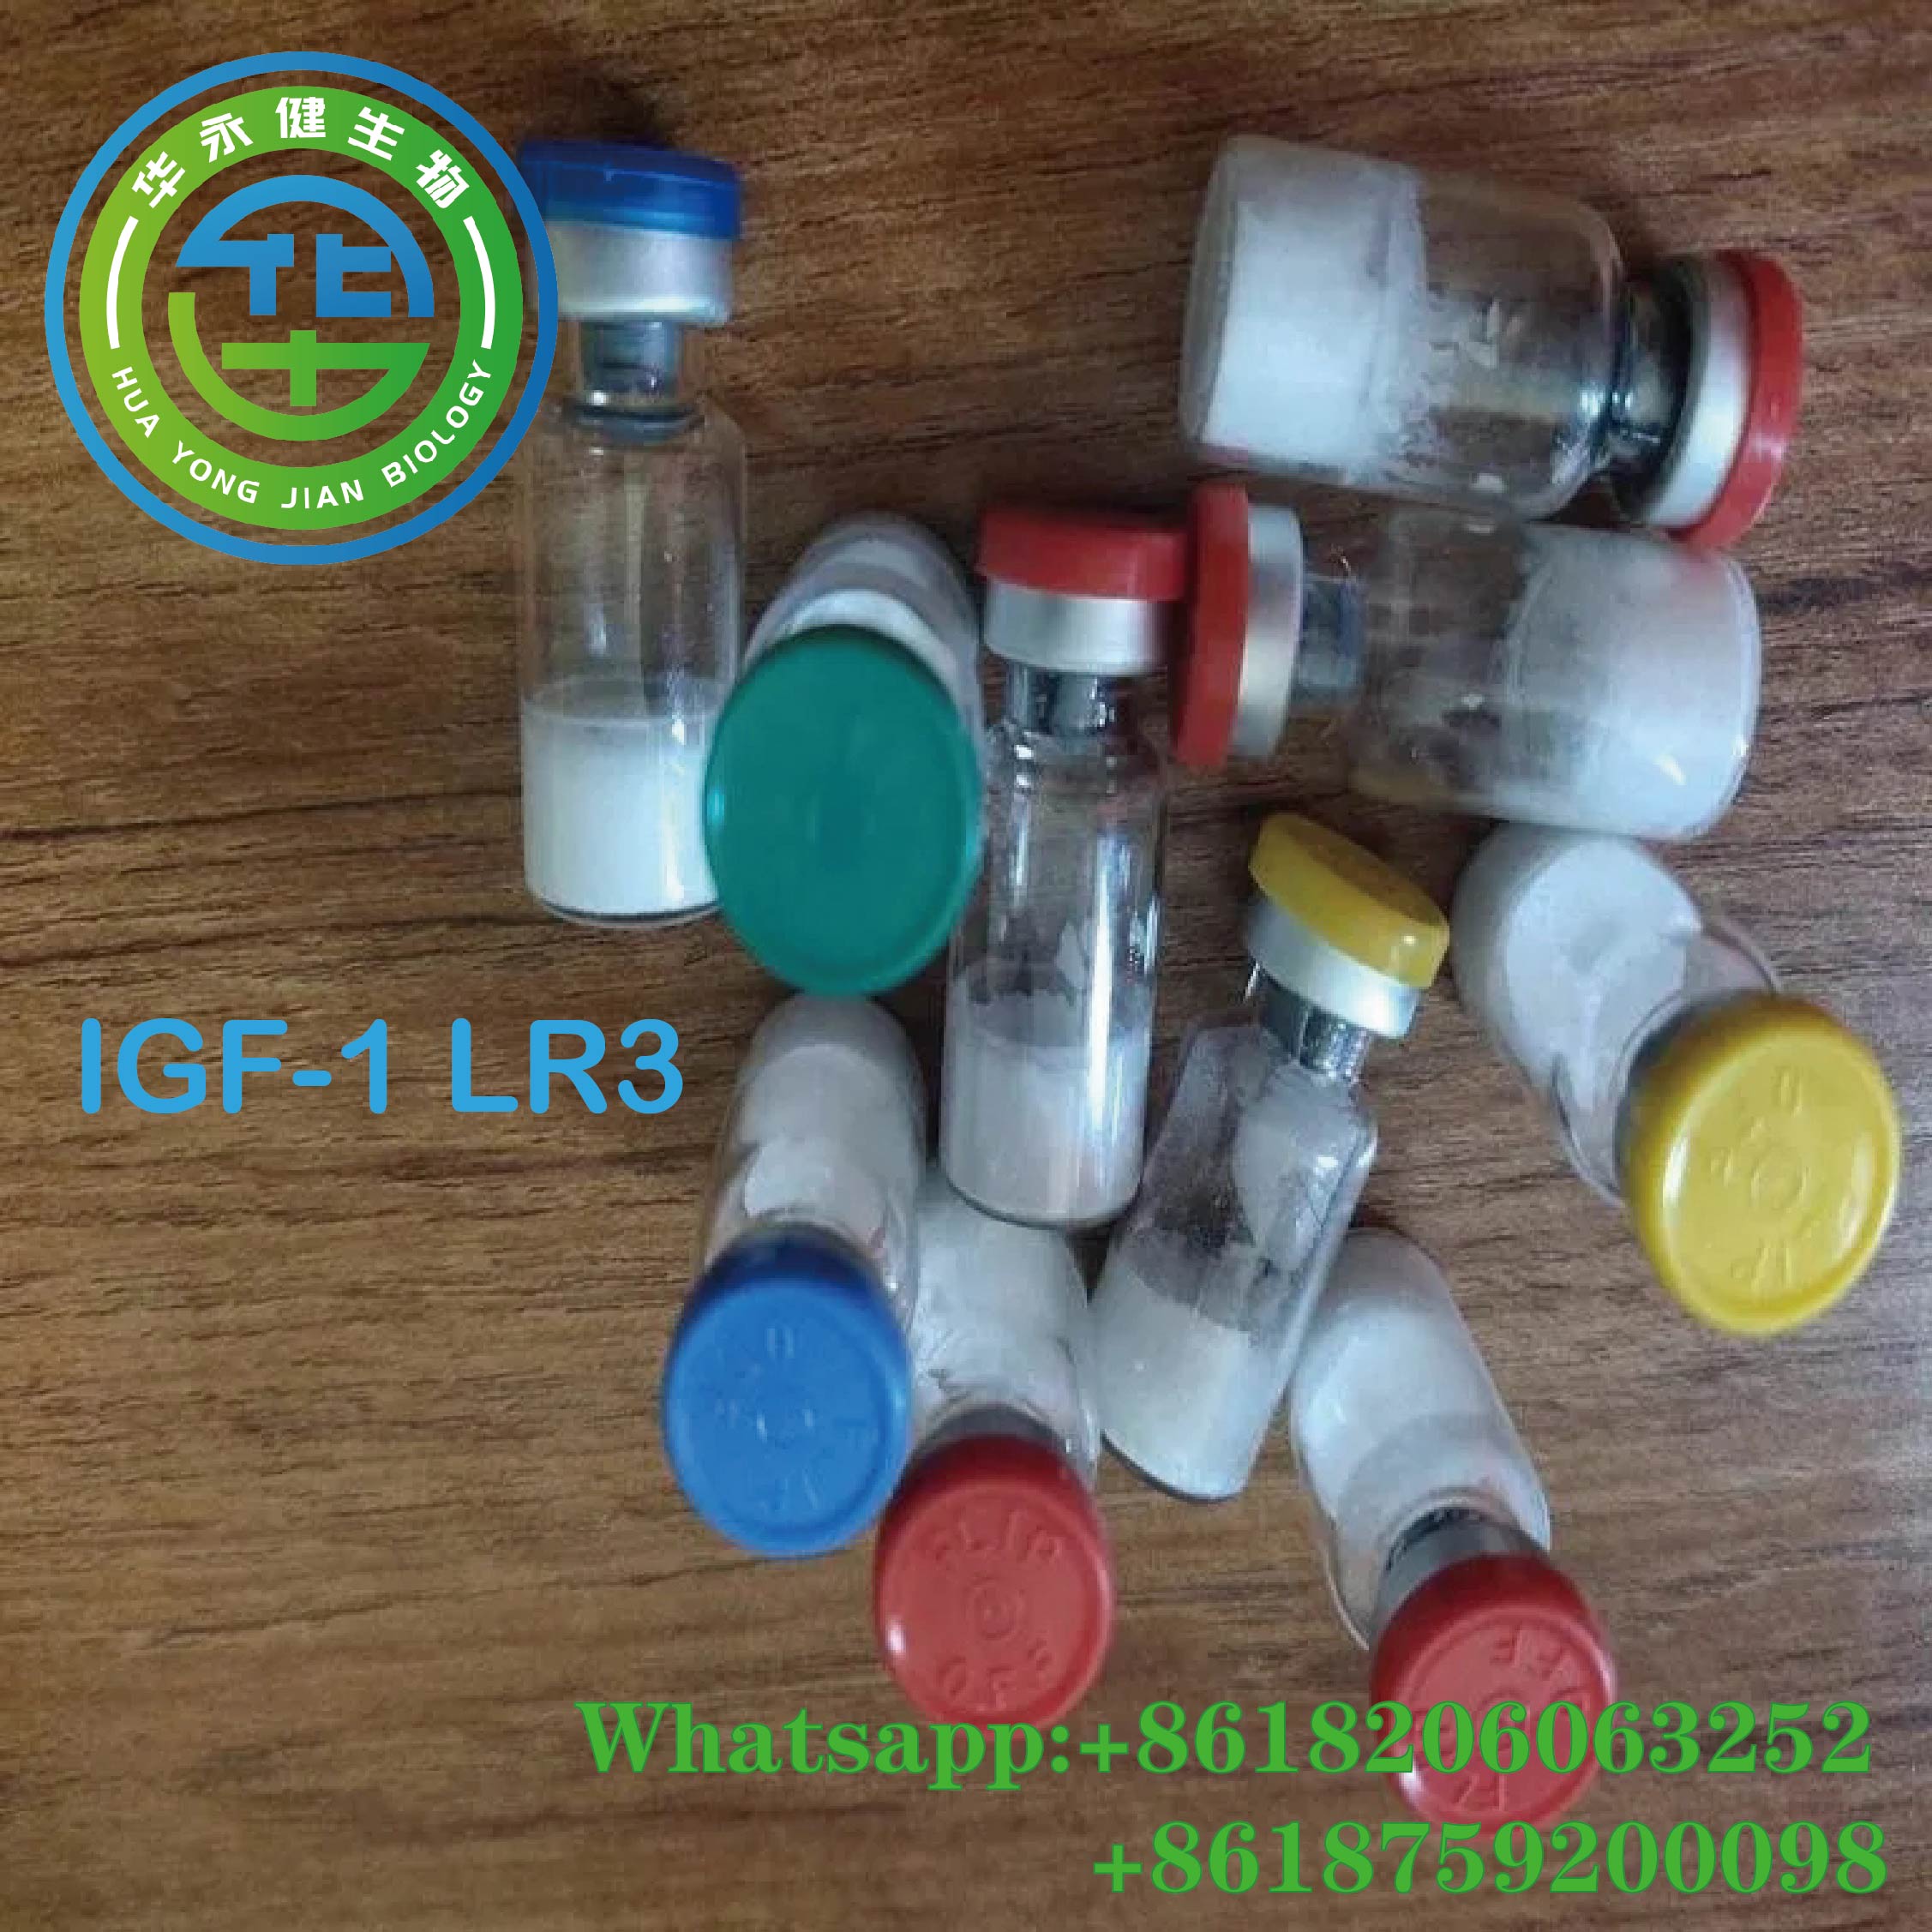 Human Growth Hormone Peptides IGF-1 LR3 0.1 mg/vial For Good Body Shape